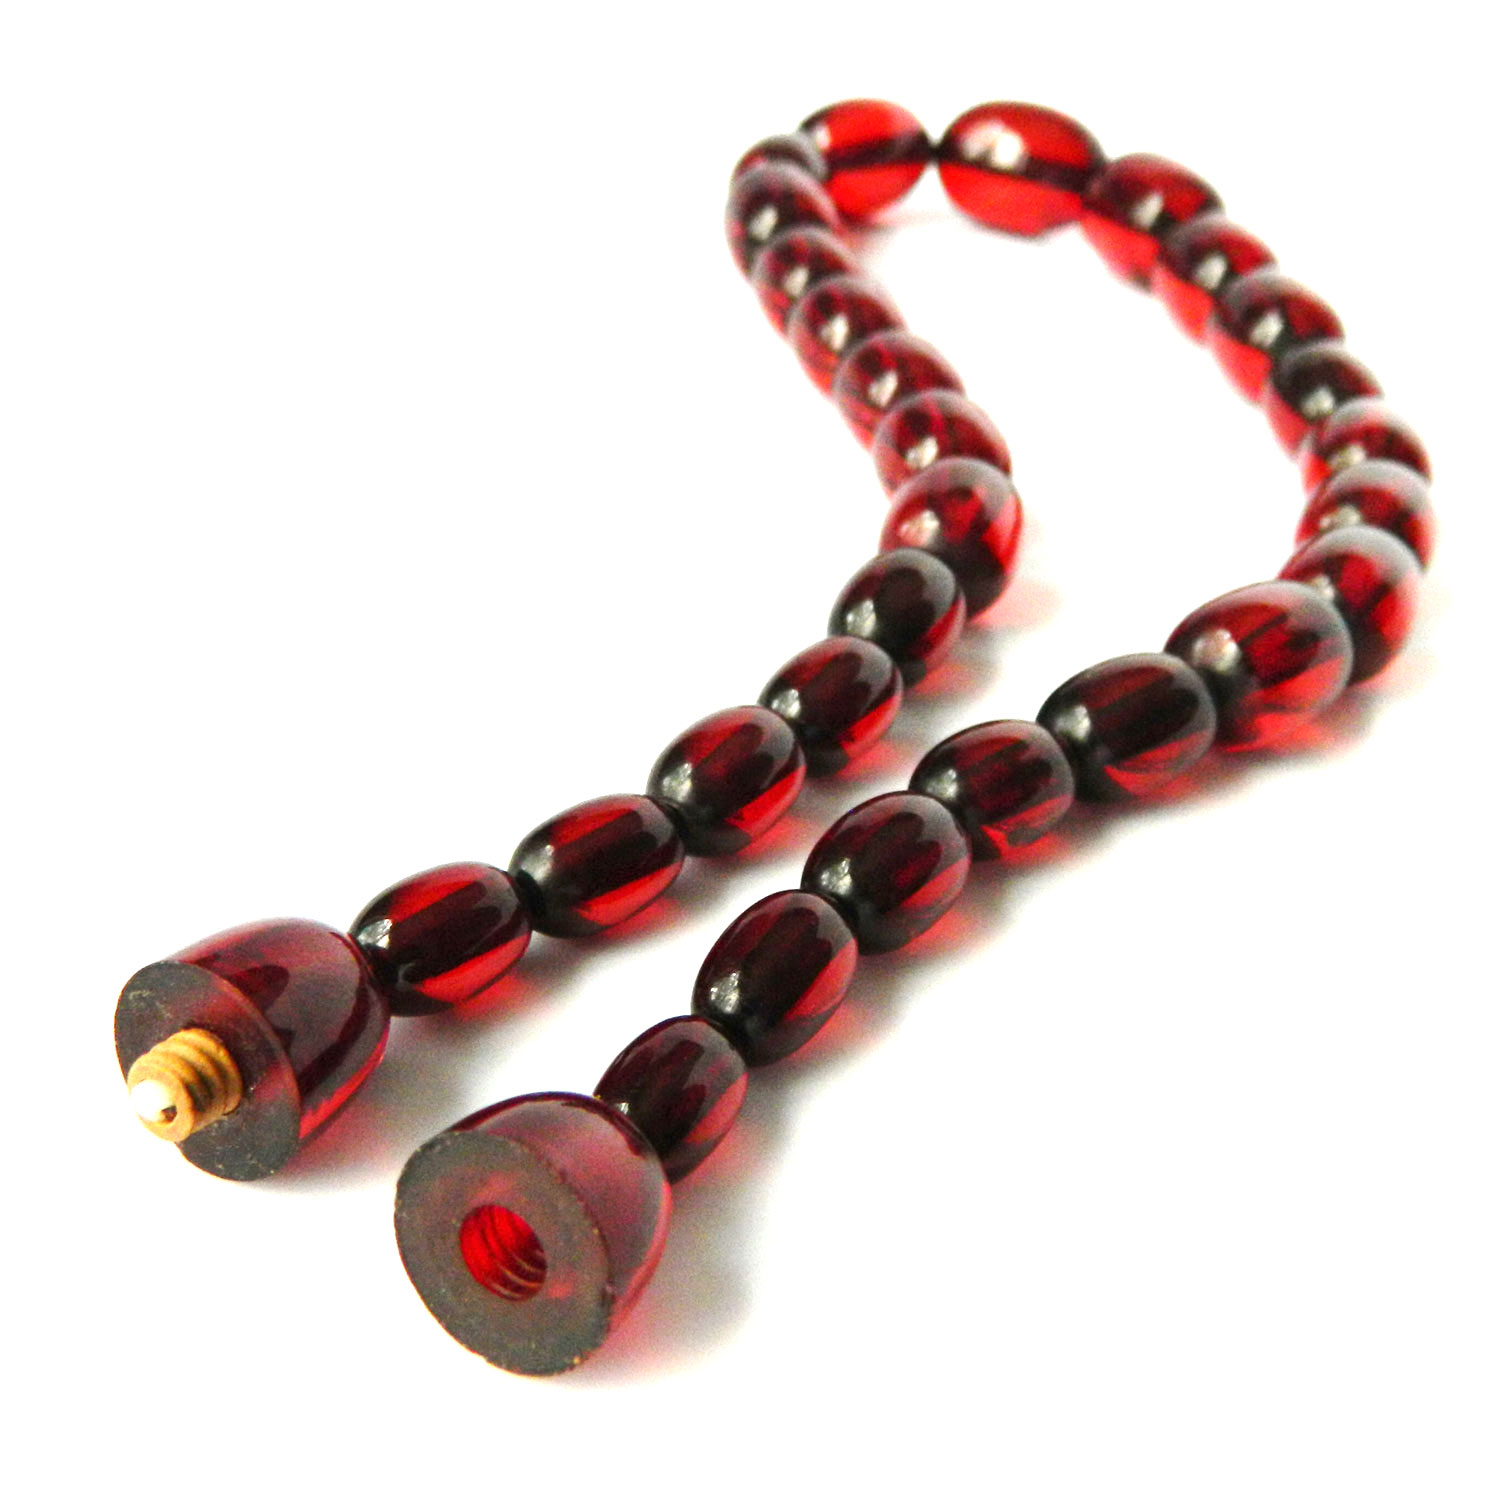 Cherry amber bead necklace